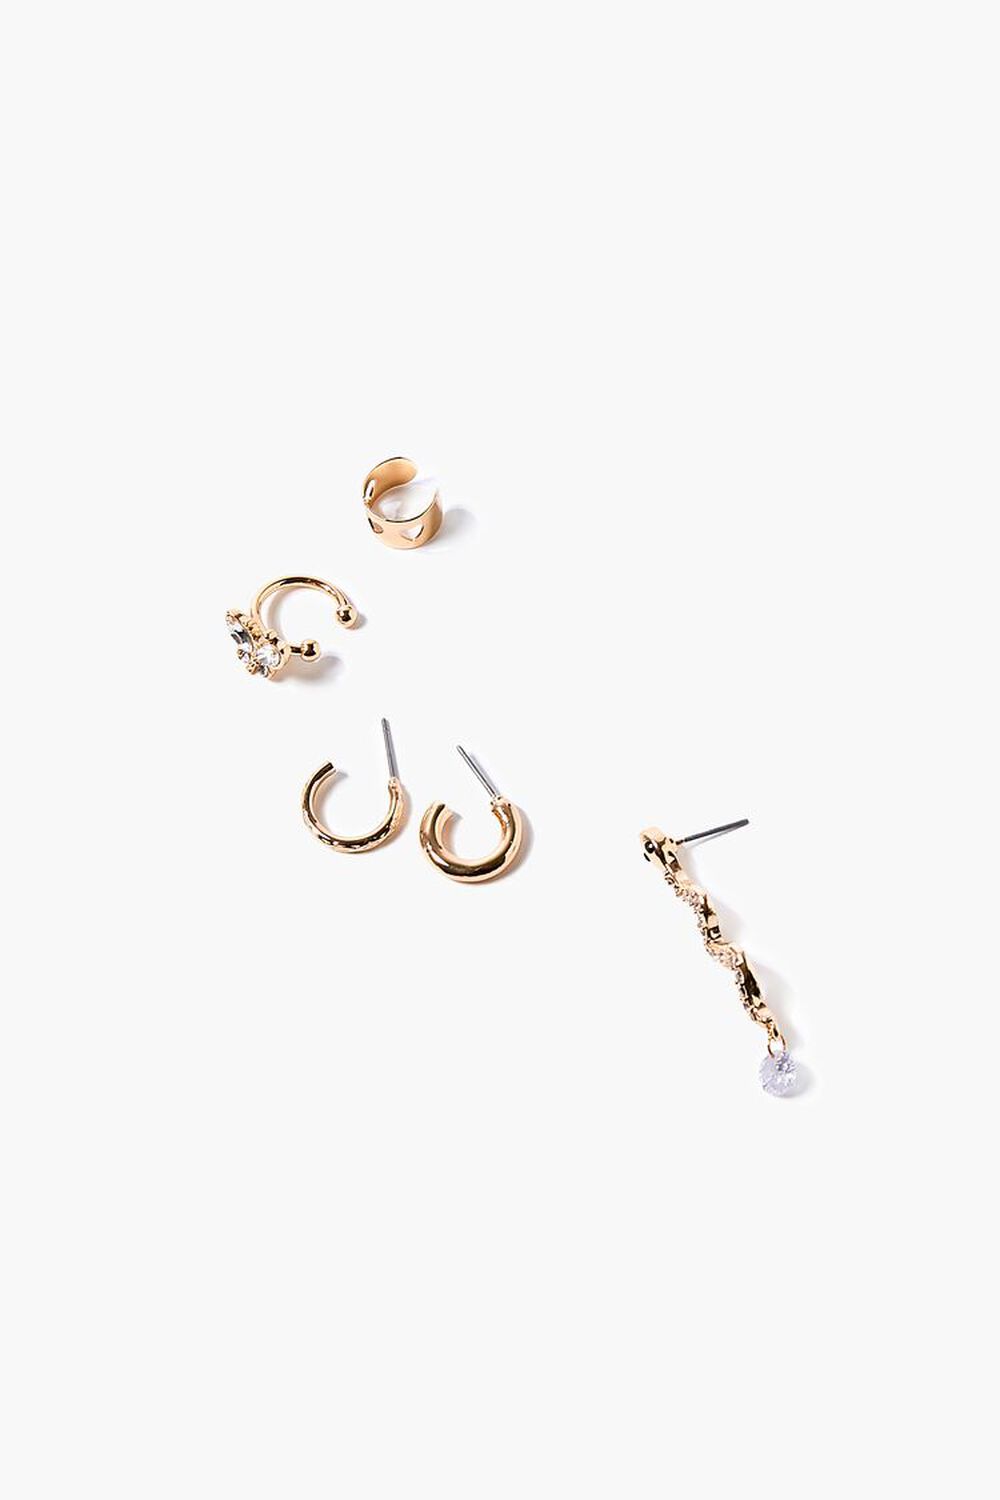 GOLD Snake Pendant Cuff & Hoop Earring Set, image 1